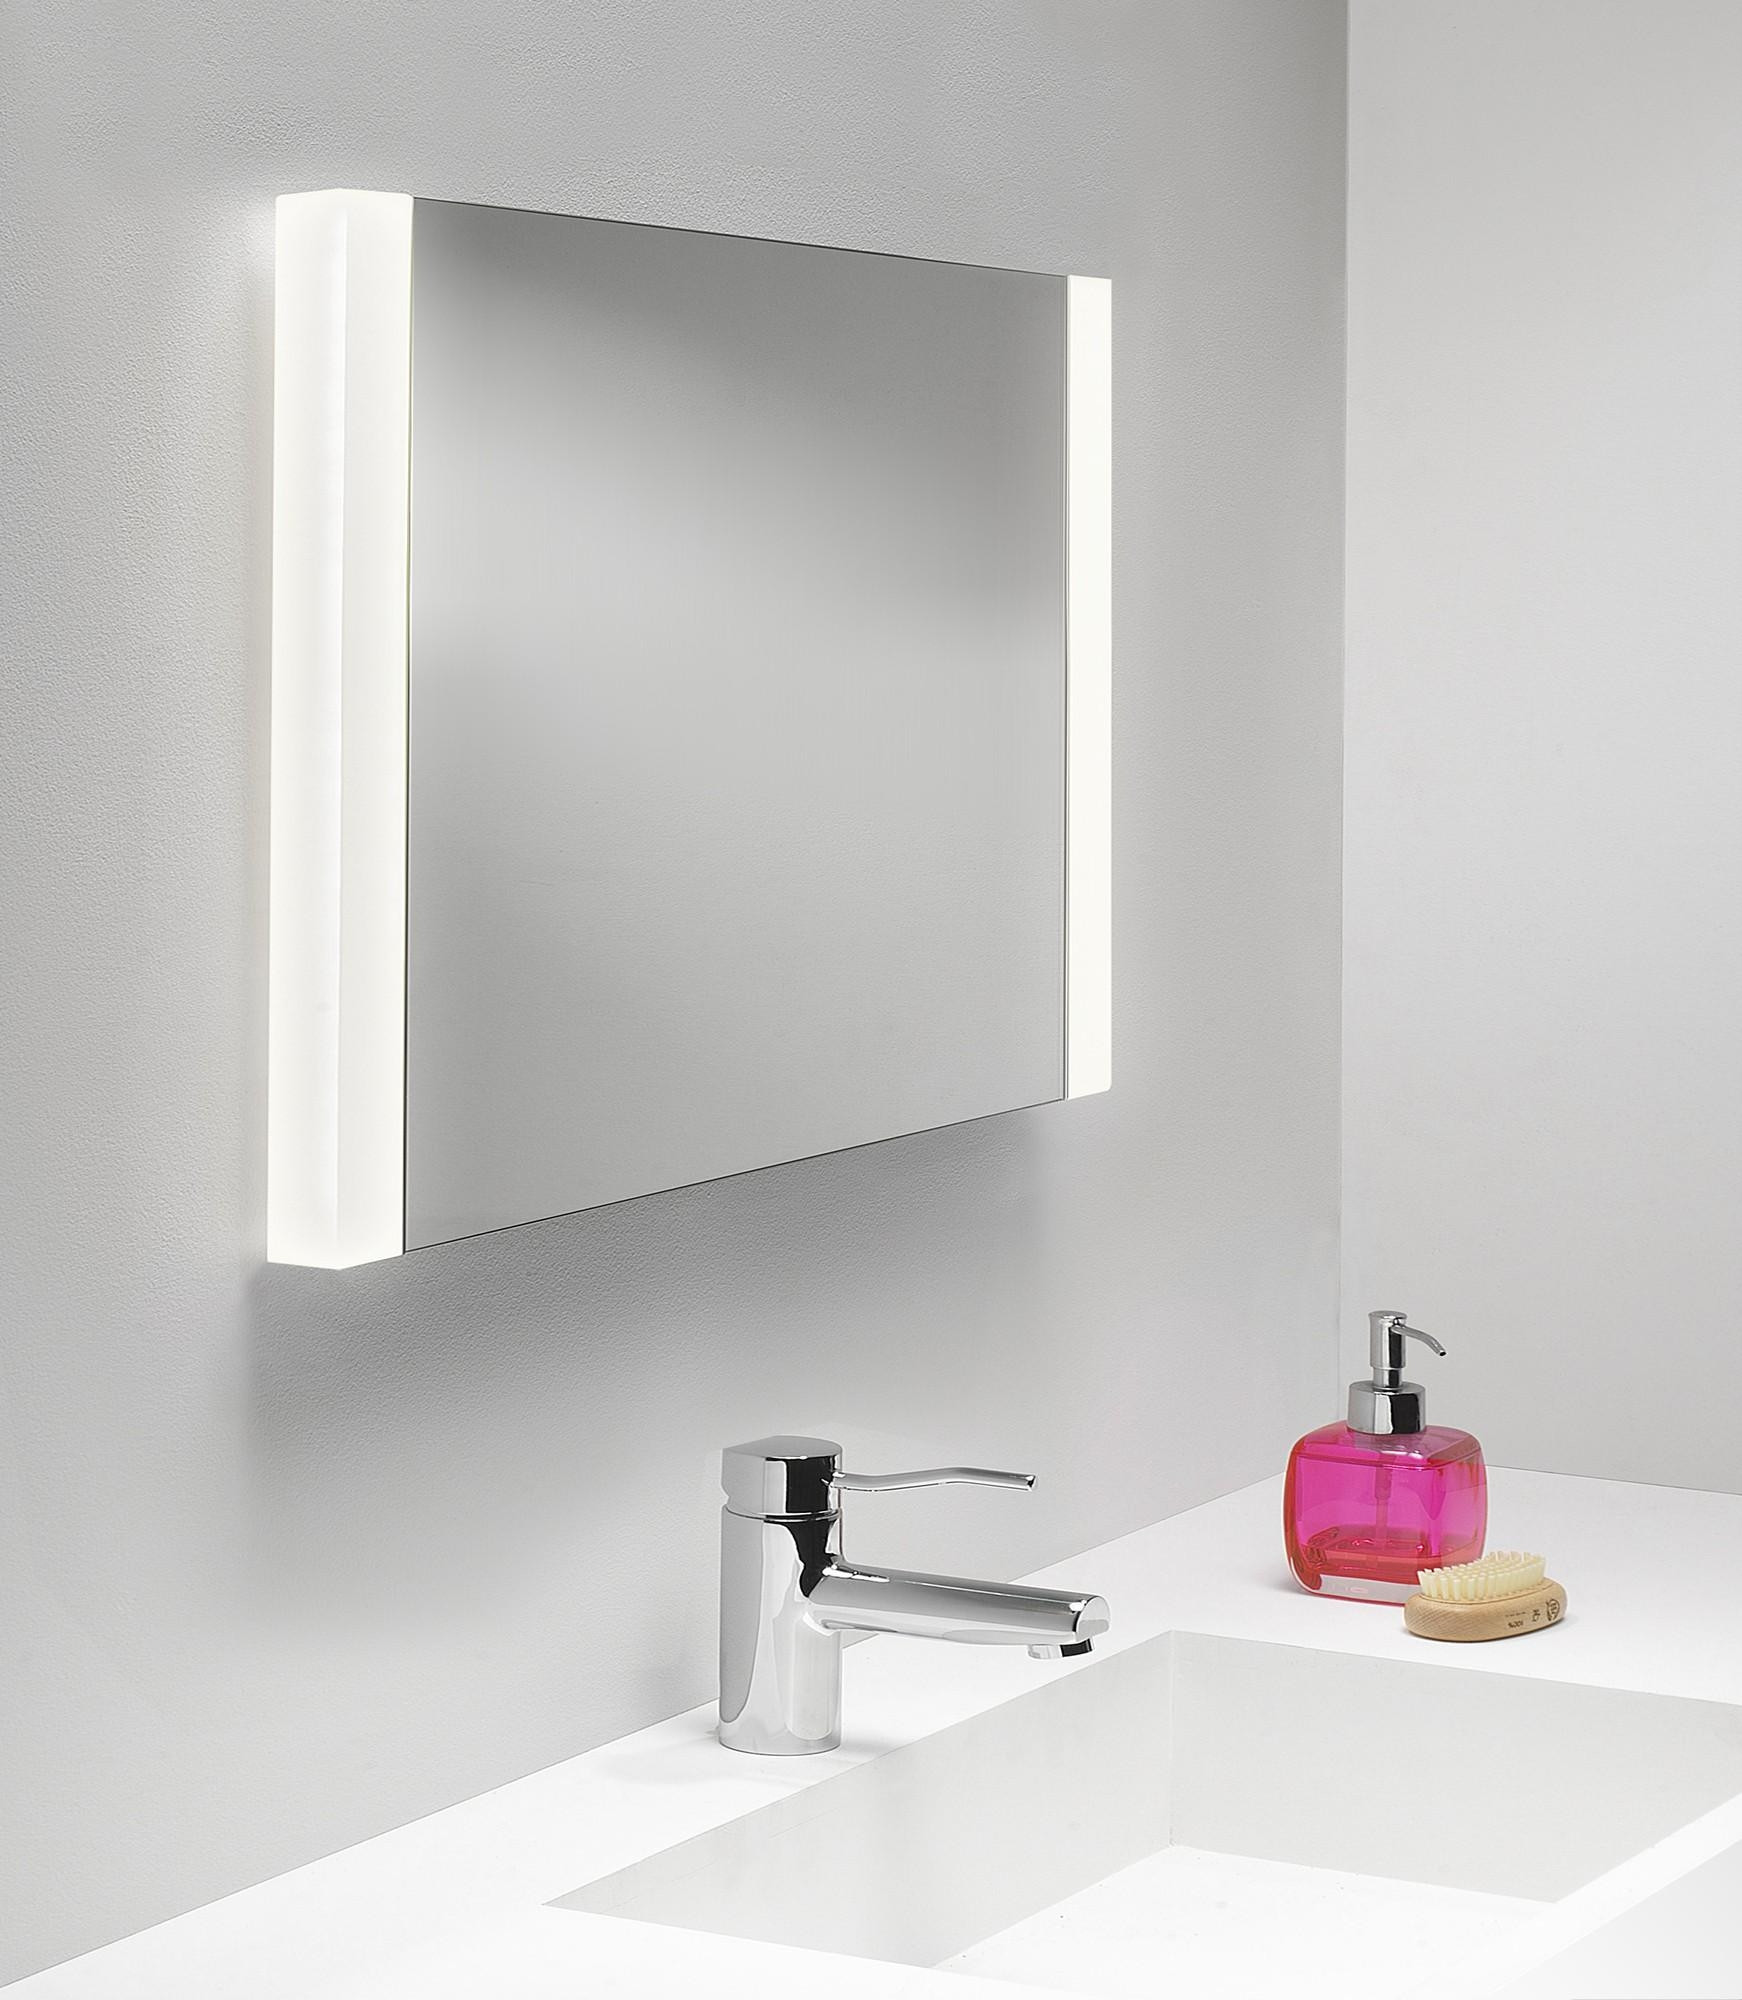 Bathroom Mirror Cabinet With Light
 Top 20 Bathroom Mirrors Lights